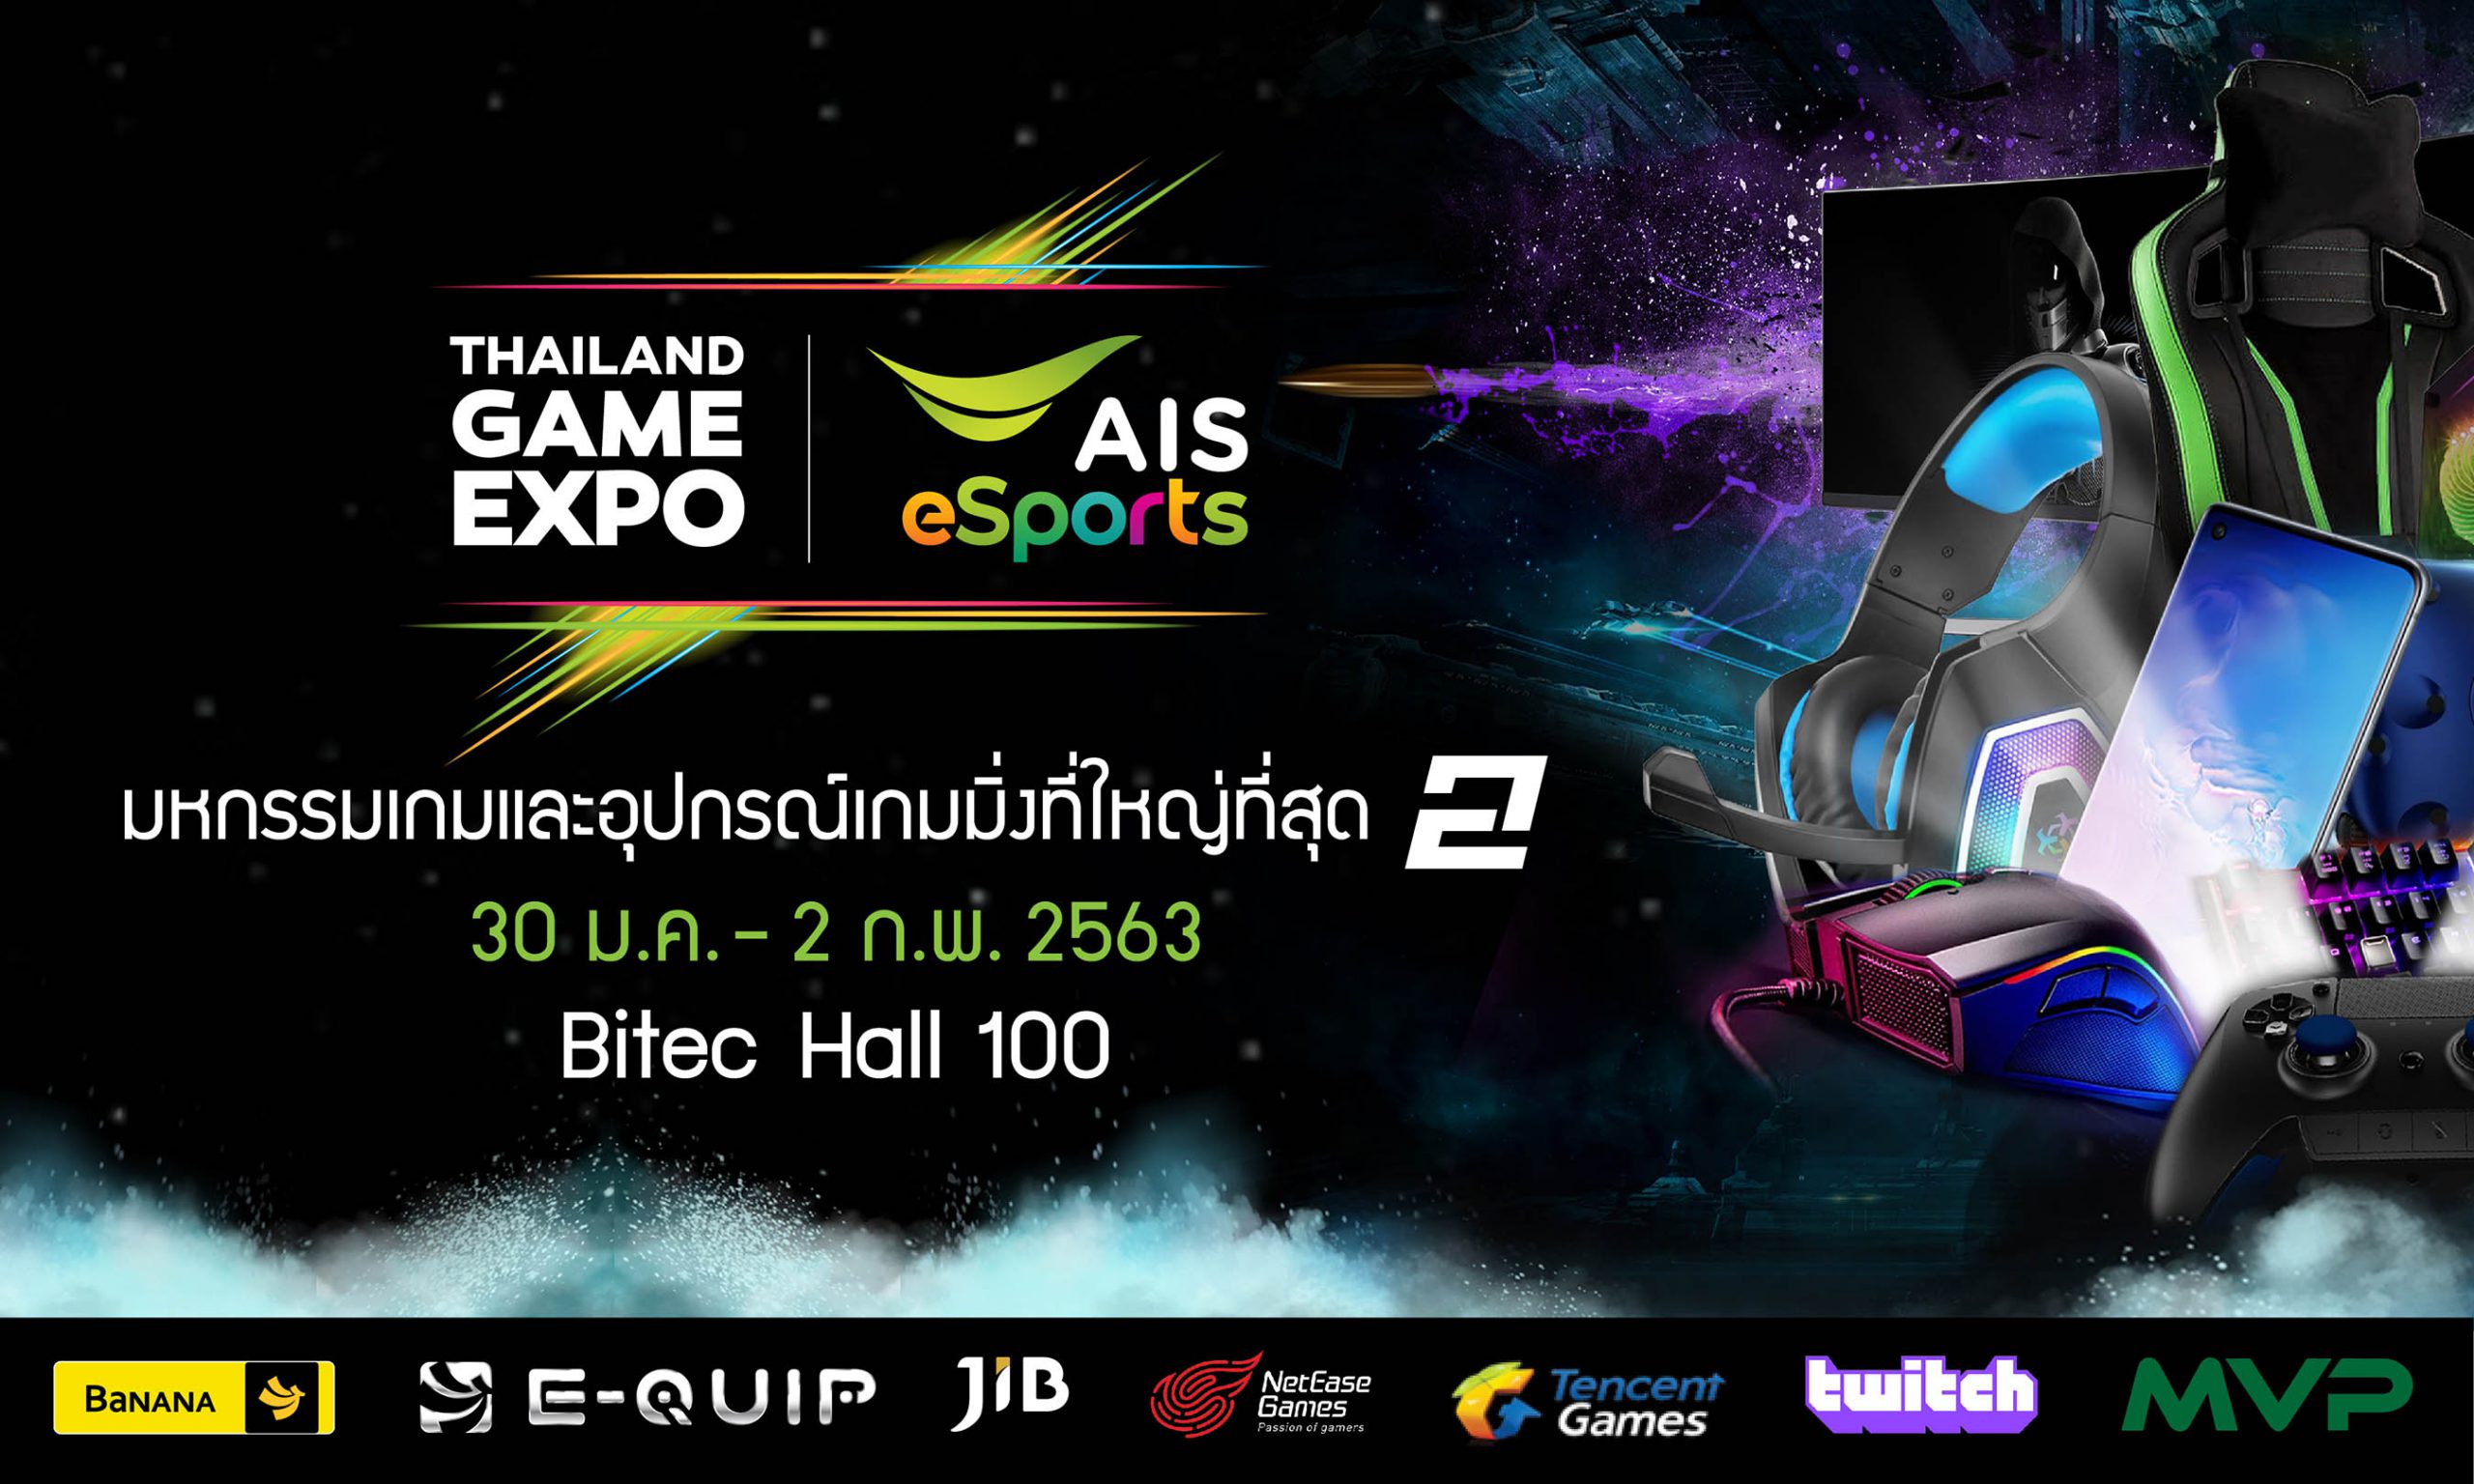 Thailand Game Expo by AIS eSports ครั้งที่ 2 มหกรรมเกมและอุปกรณ์ เกมมิ่งสุดยิ่งใหญ่แห่งปี